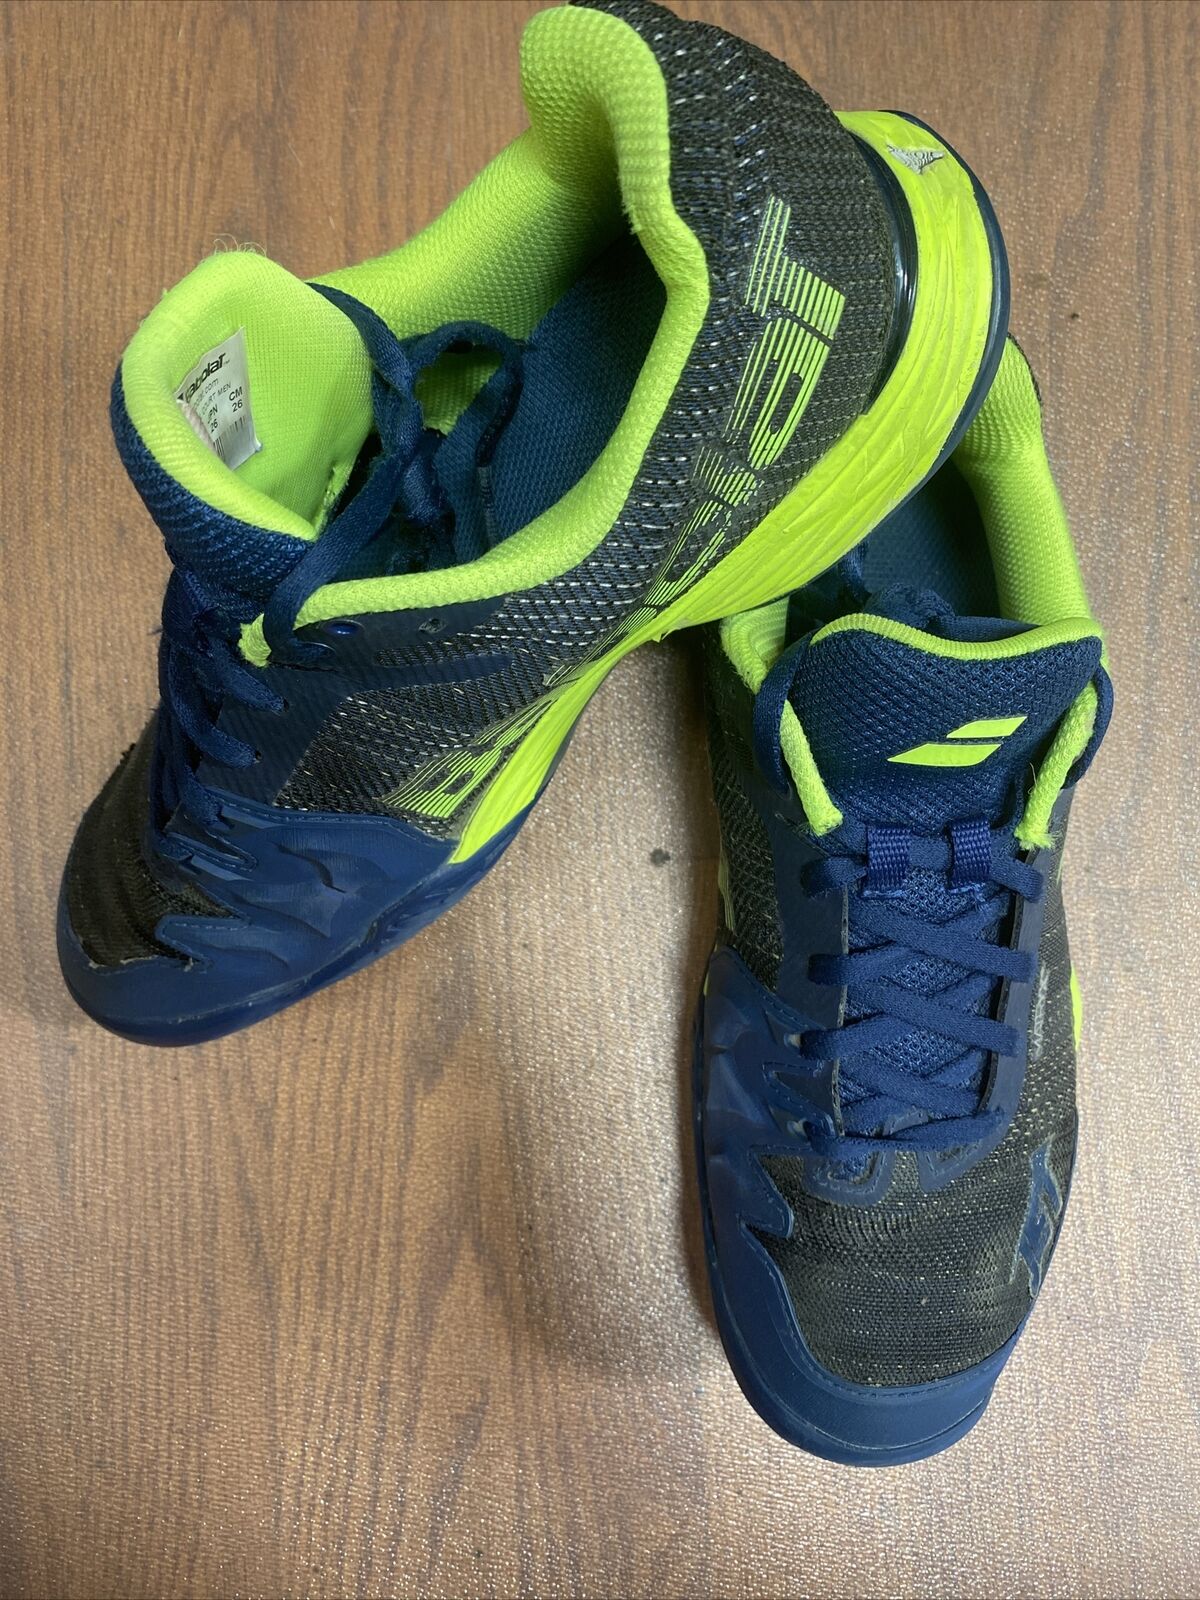 Babolat Jet Mach Ii Estate Blue Black Yellow Mens Tennis Shoes Size 8